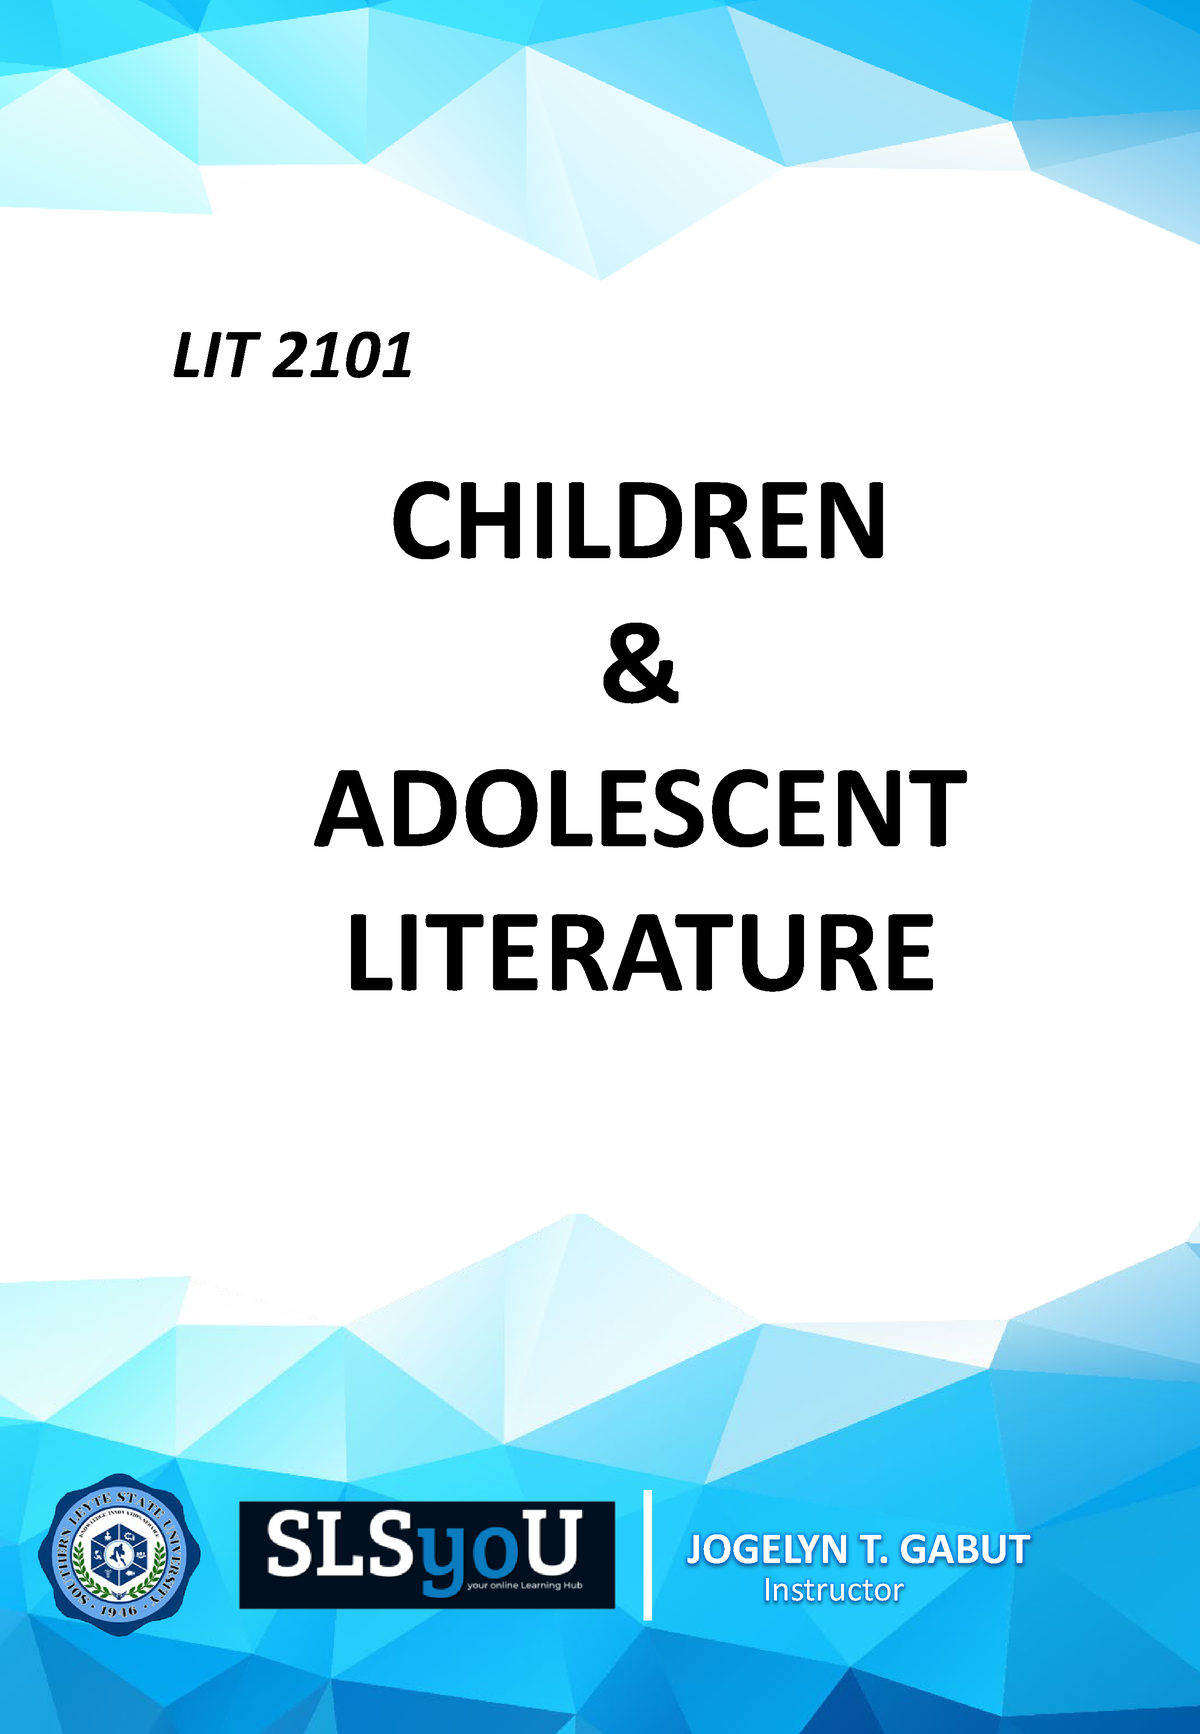 thesis on children's literature pdf